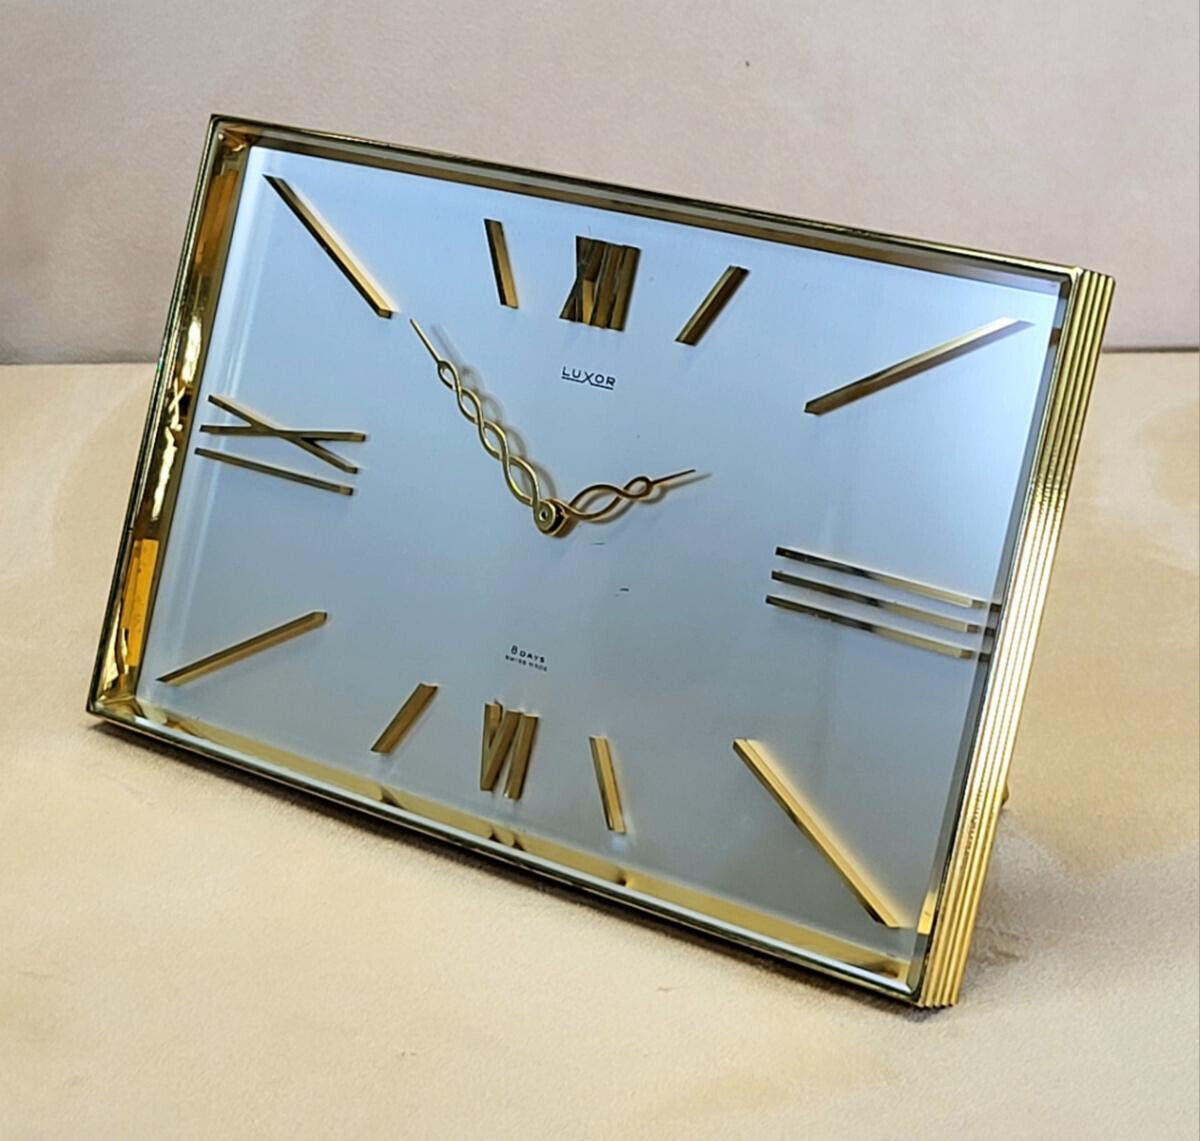 Best of Class Mid-Century Modern LUXOR Swiss Mantel Shelf Clock 8-day, 15-jewel